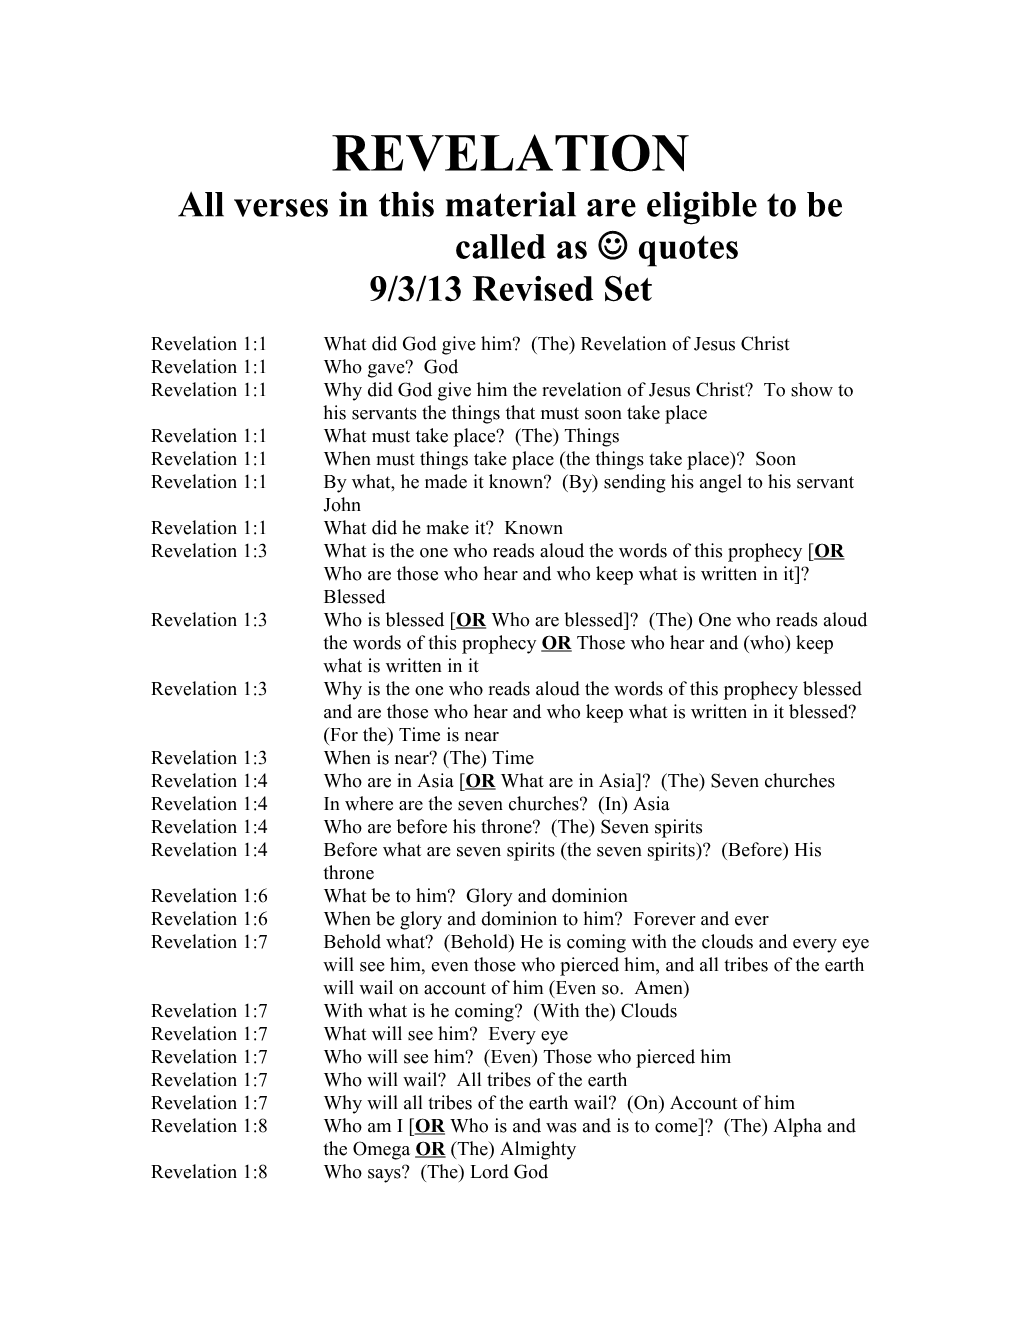 Romans / James /Revelation